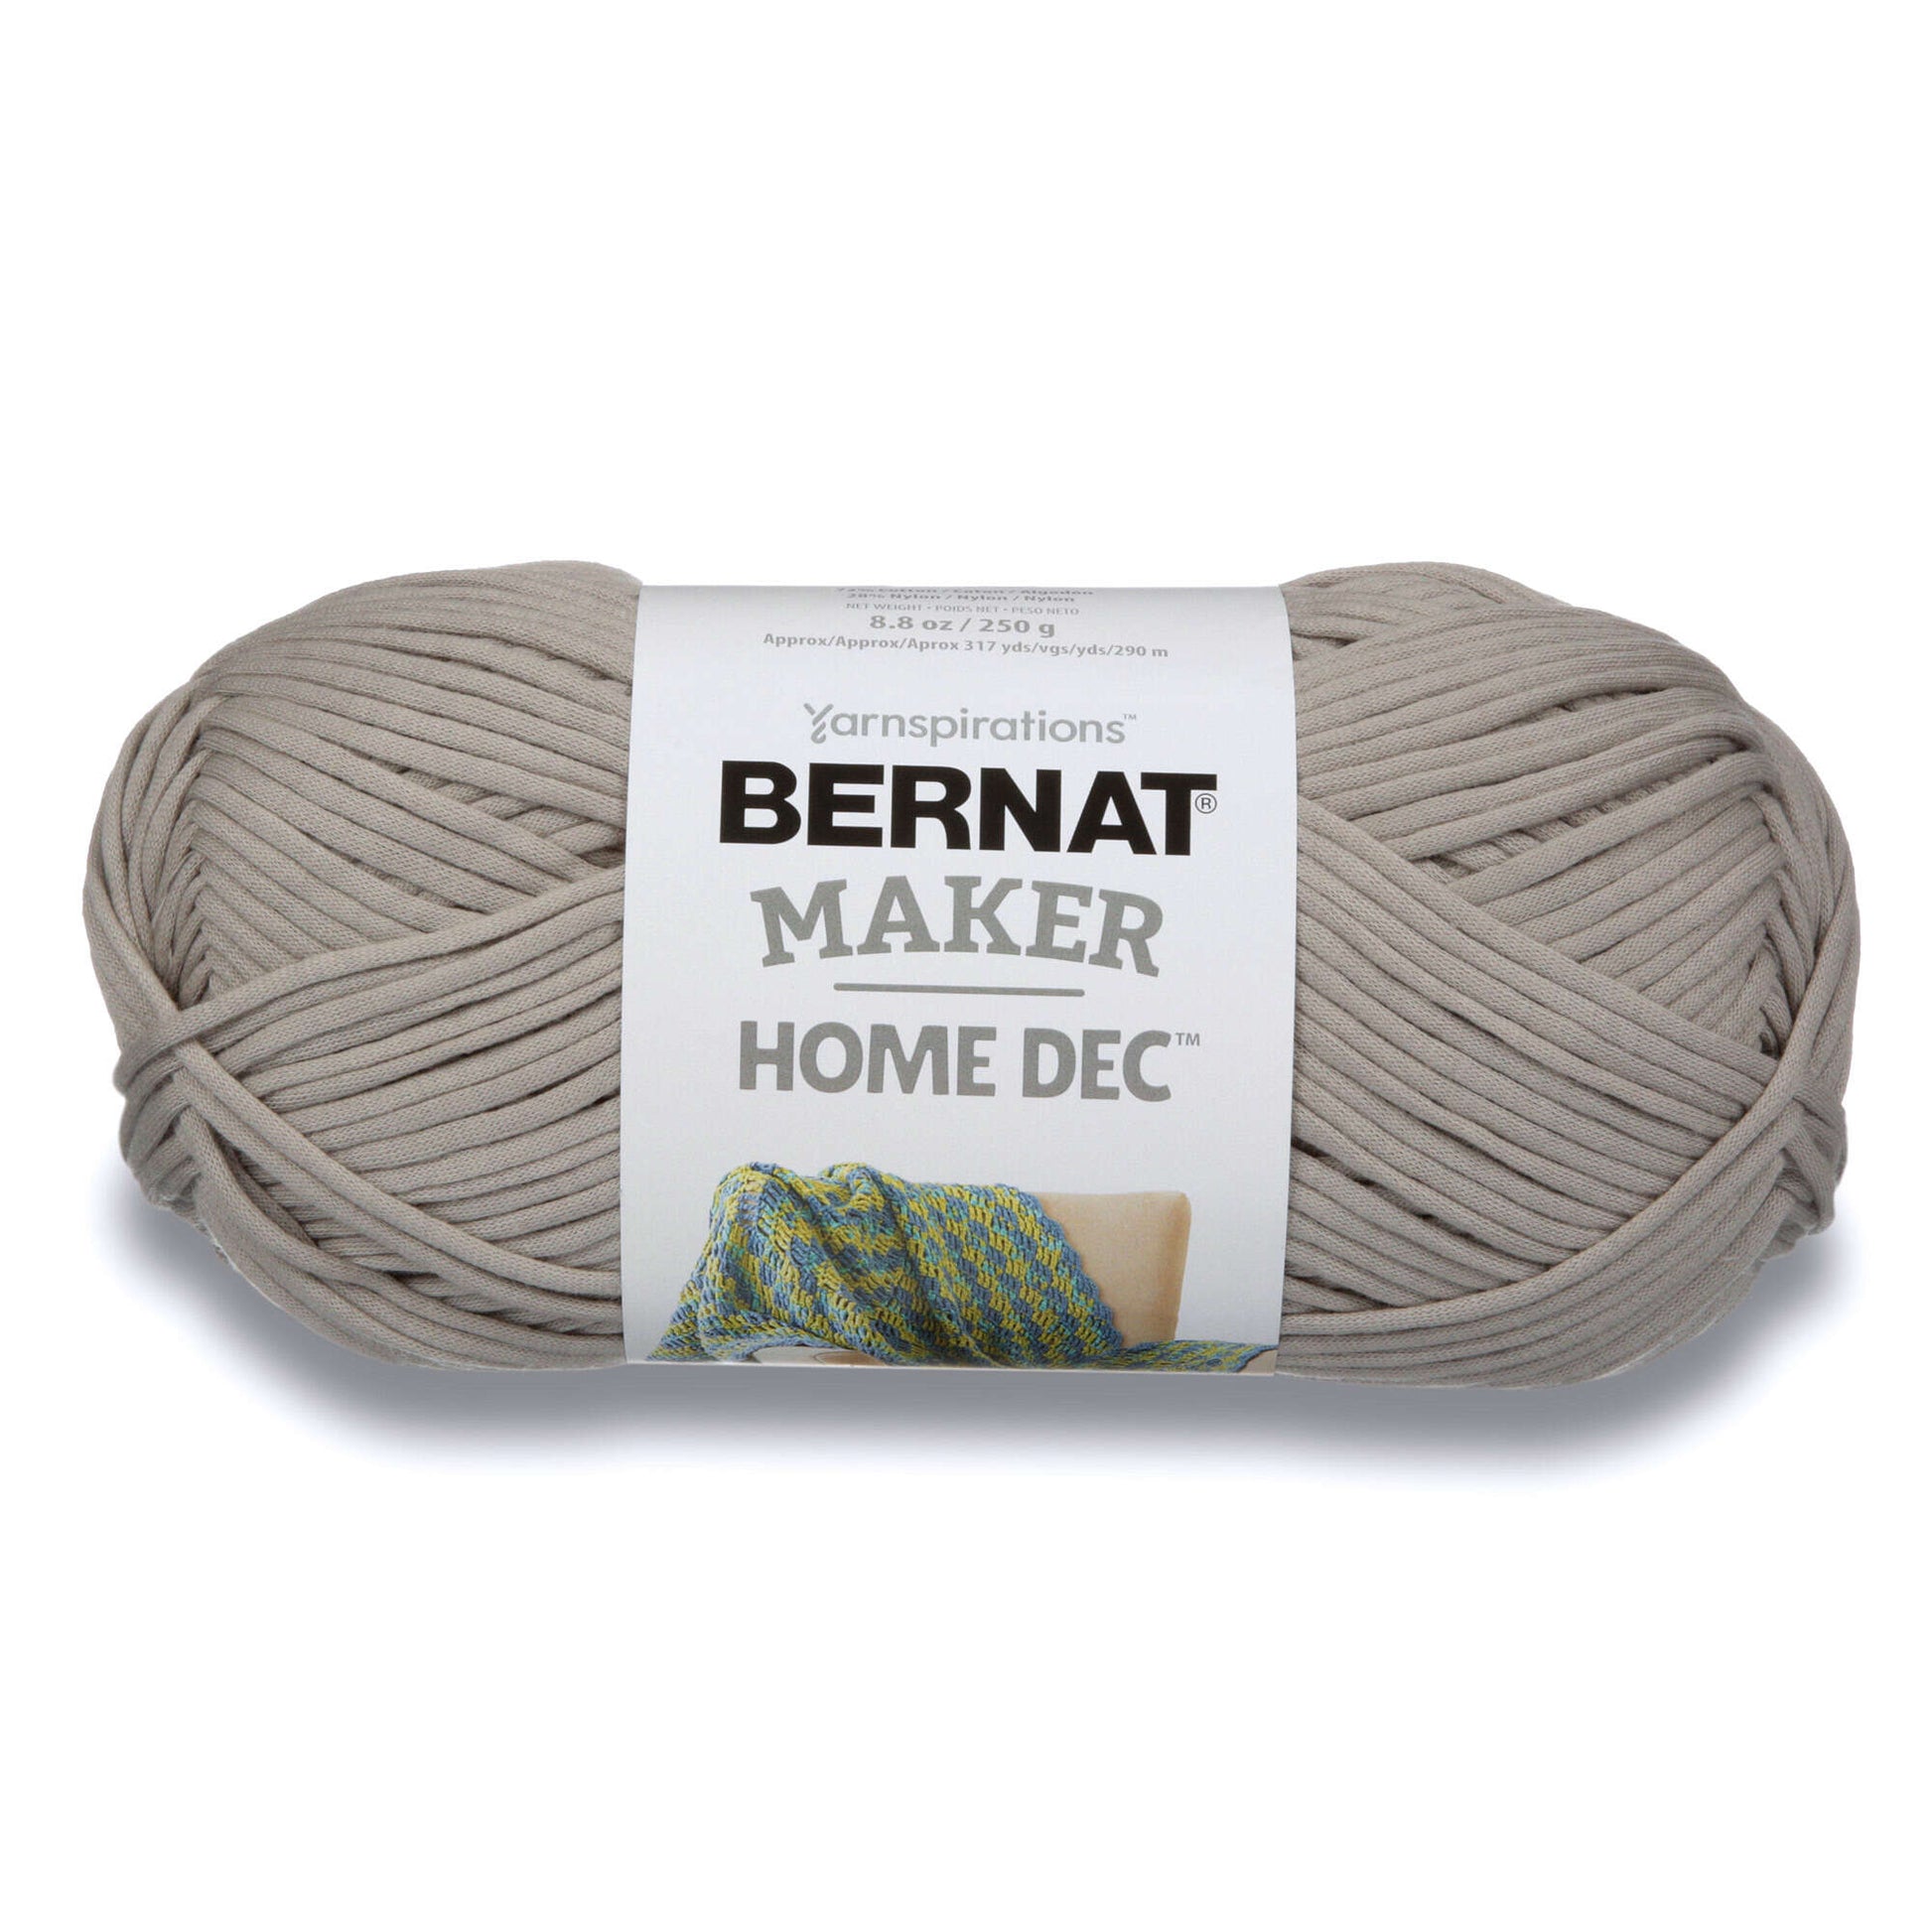 Bernat Maker Home Dec Yarn - Clearance Shades